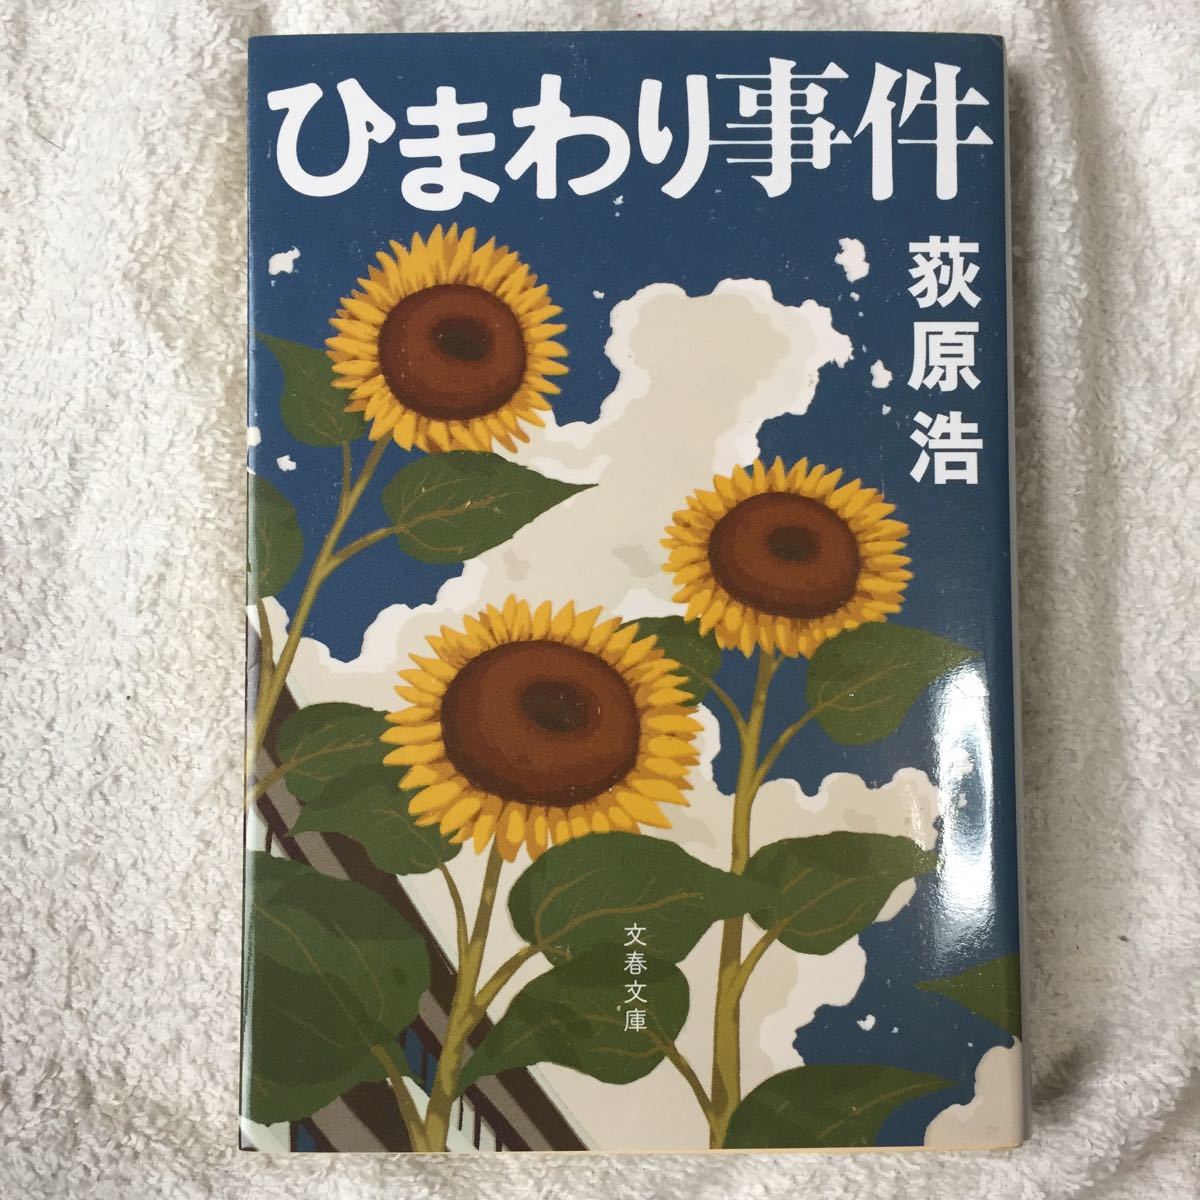  sunflower . case ( Bunshun Bunko ) Ogiwara Hiroshi 9784167809027